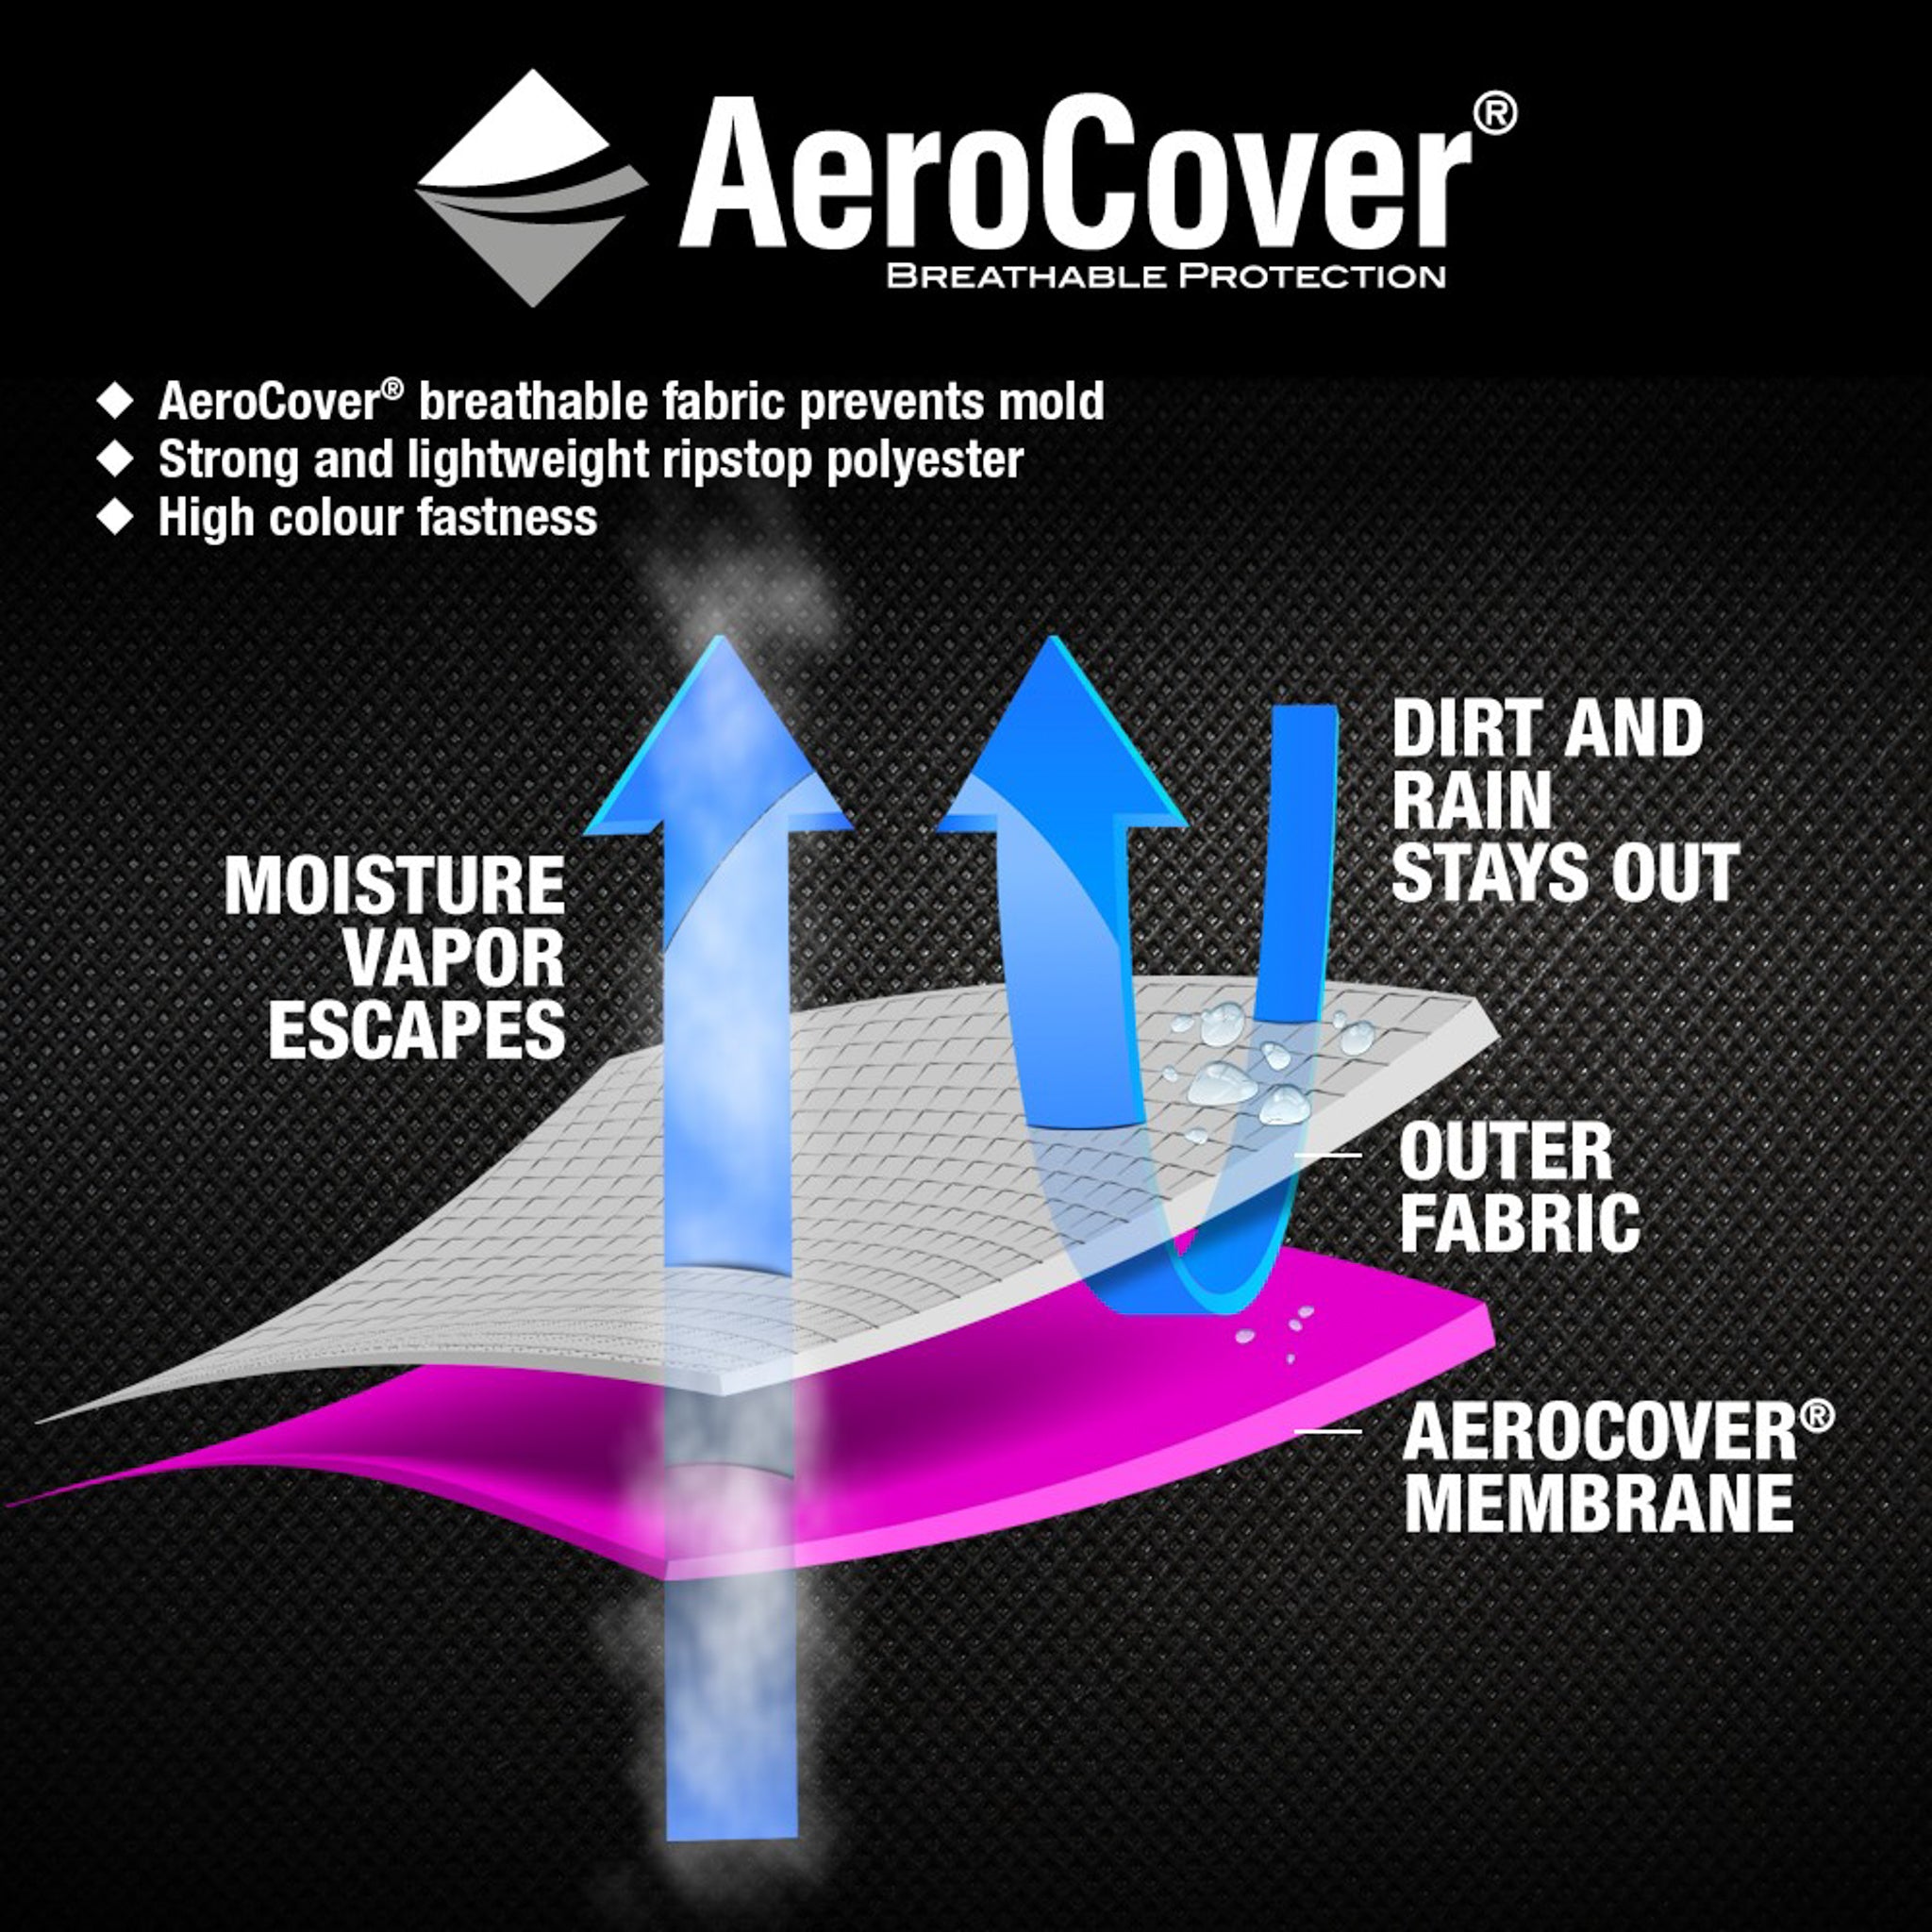 AeroCover - Firetable 64x64x65cm high